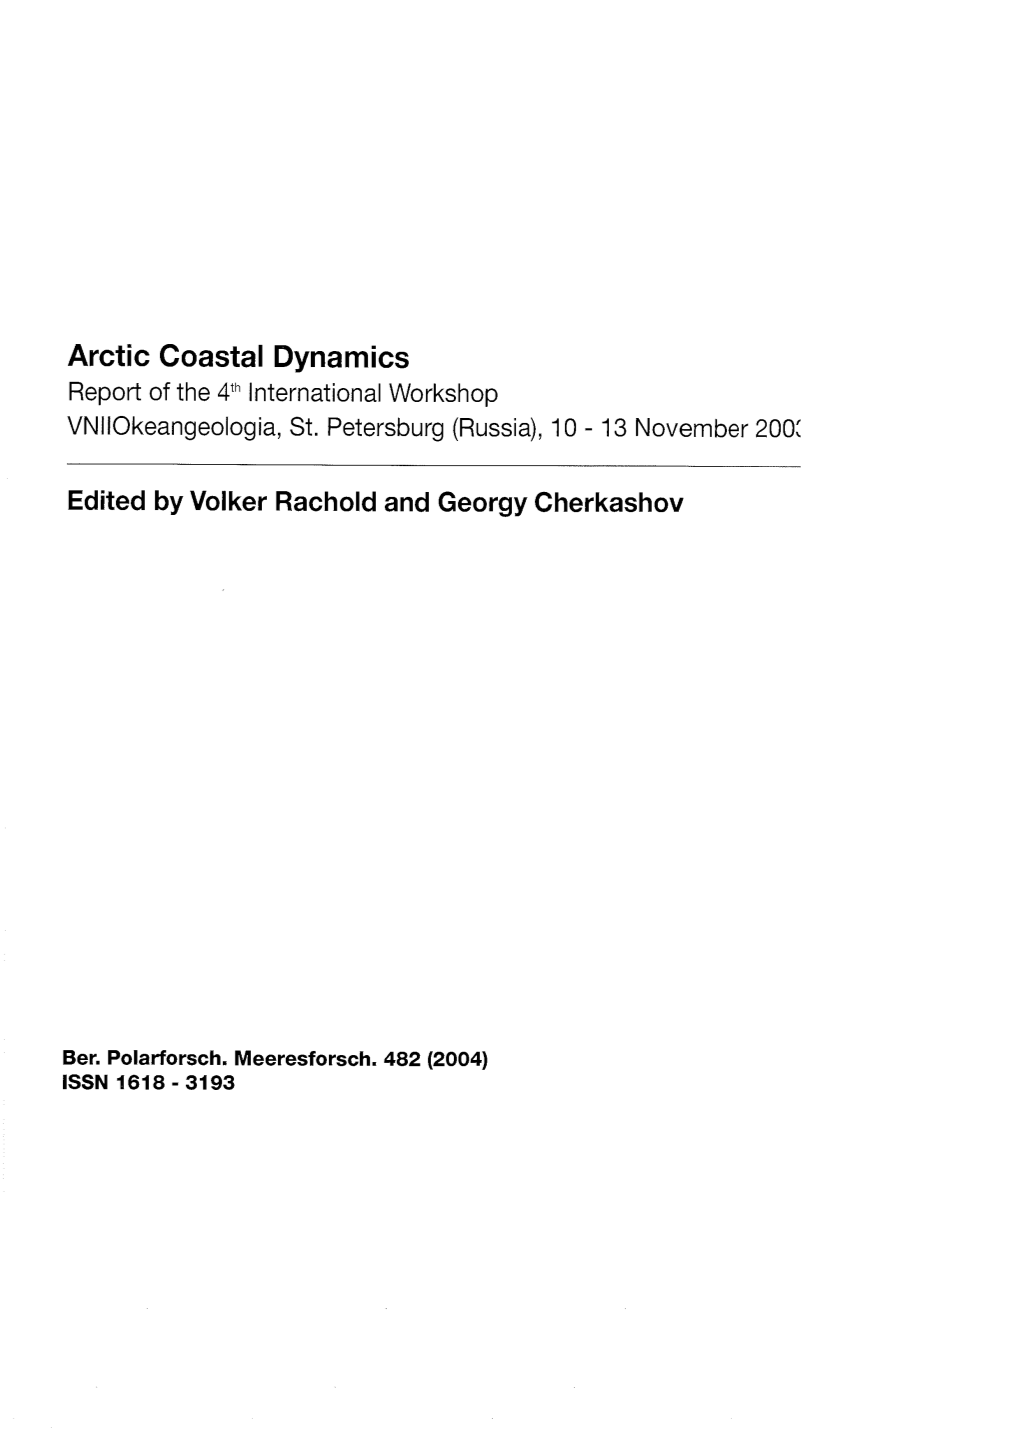 Arctic Coastal Dynamics Report of the International Workshop Vniiokeangeologia, St